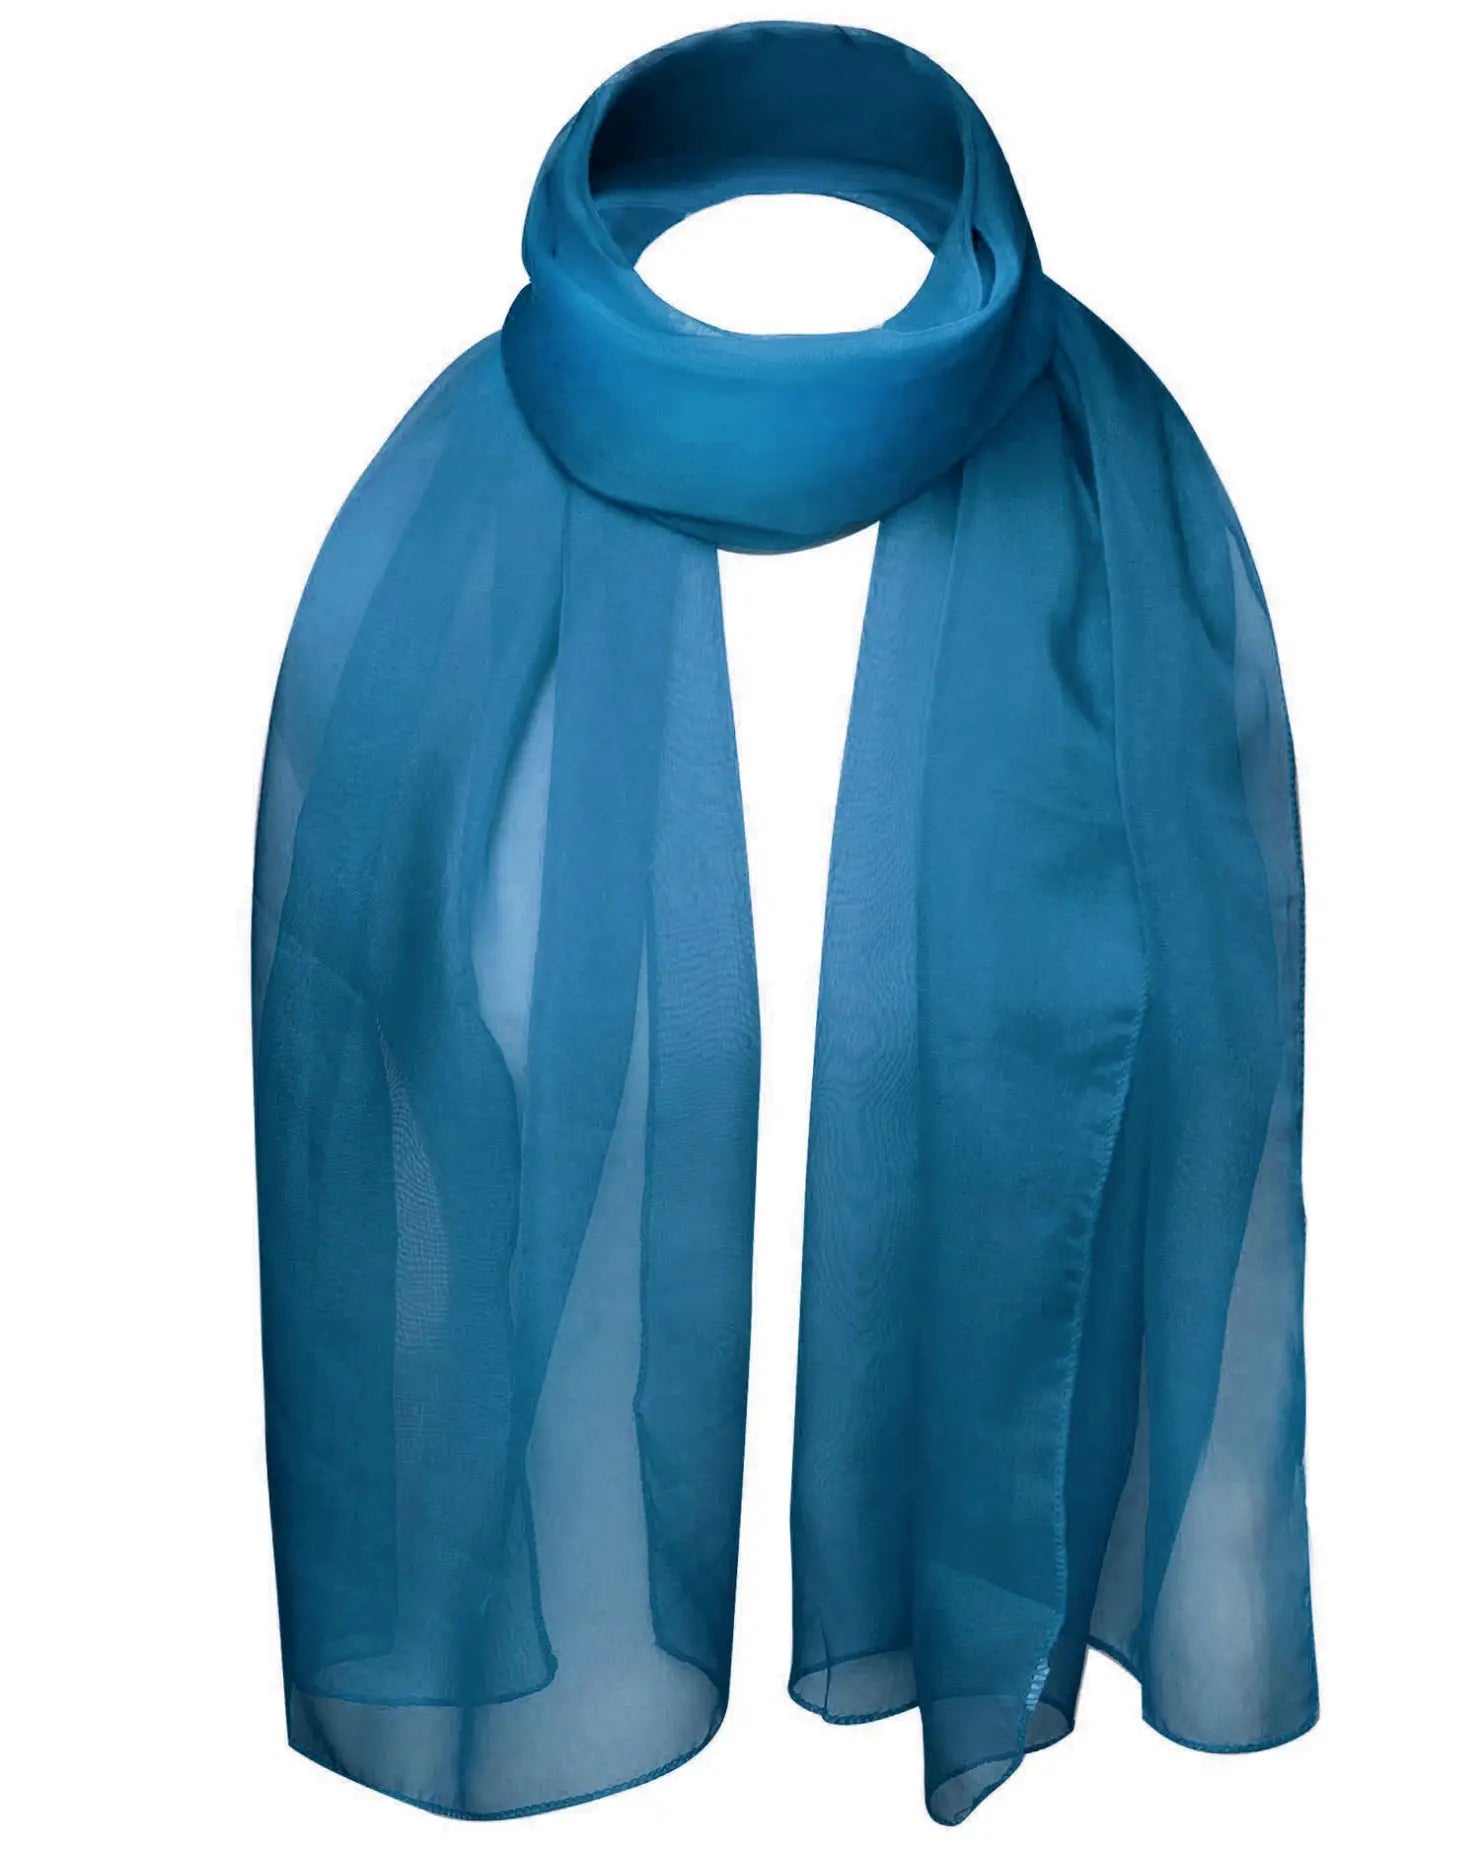 Classic Plain Chiffon Scarf in Blue: Luxurious Lightweight Design